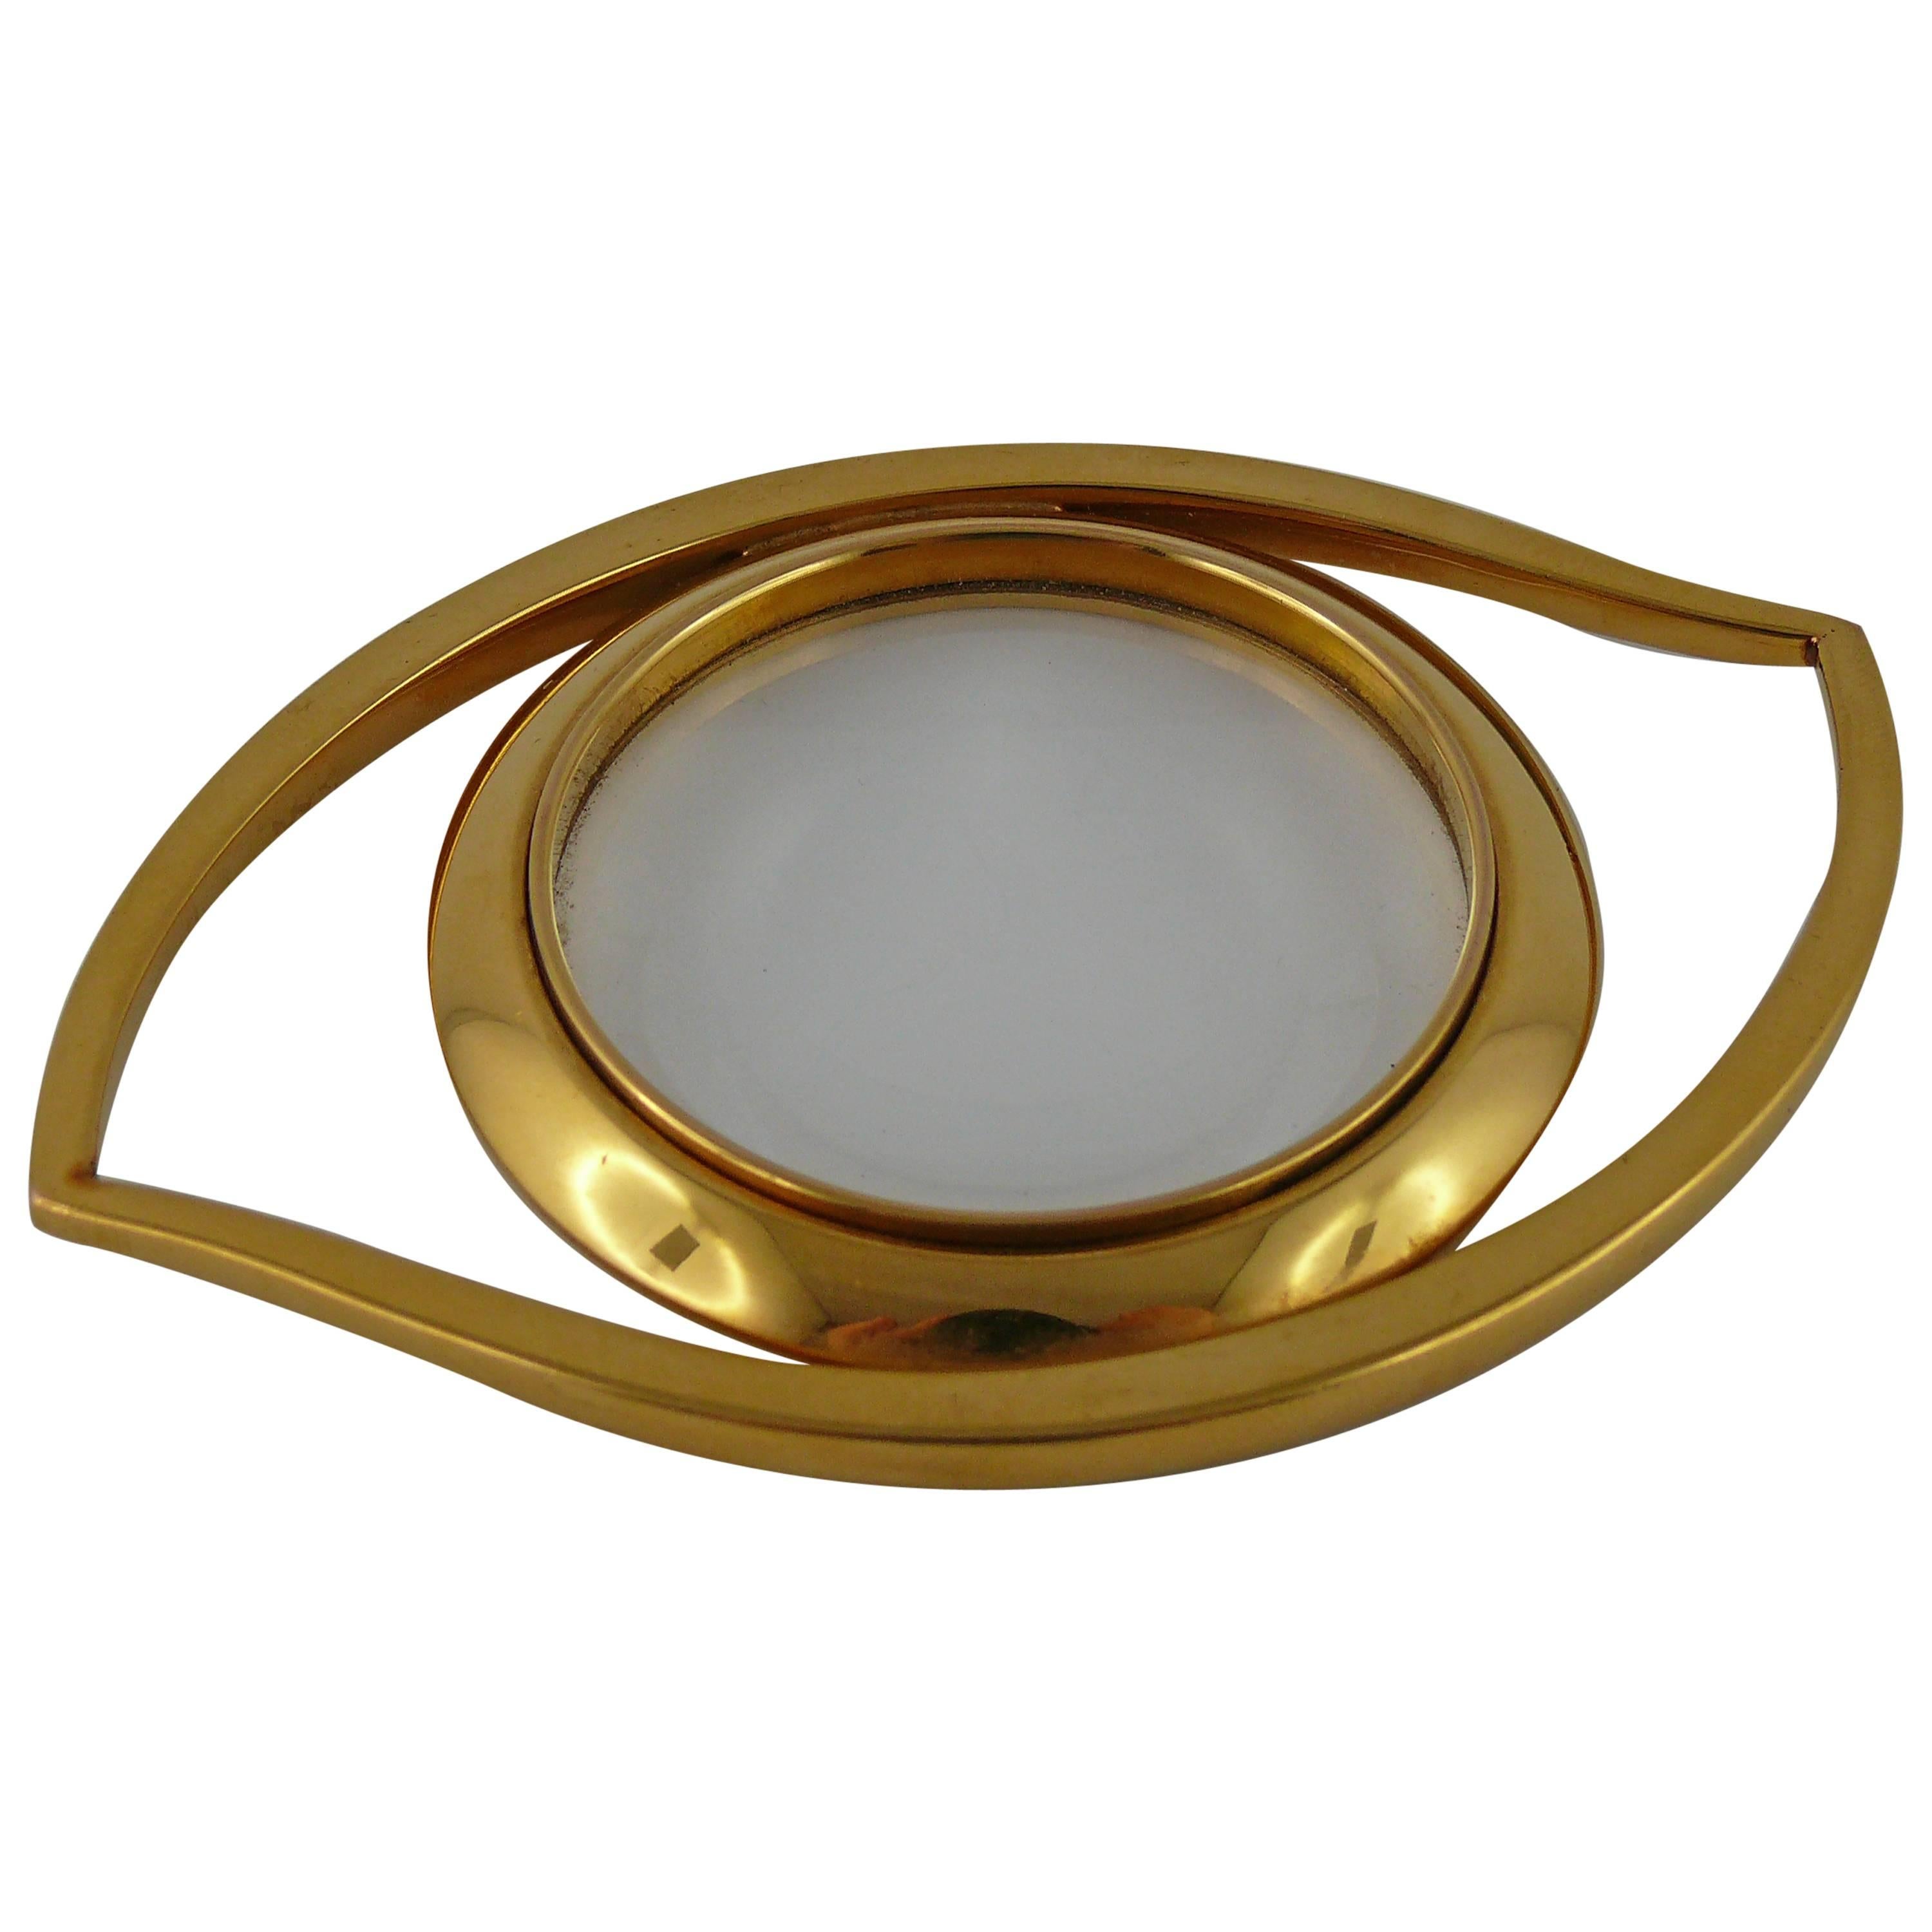 Hermes Vintage "Cleopatra Eye" Desk Magnifying Glass Paperweight